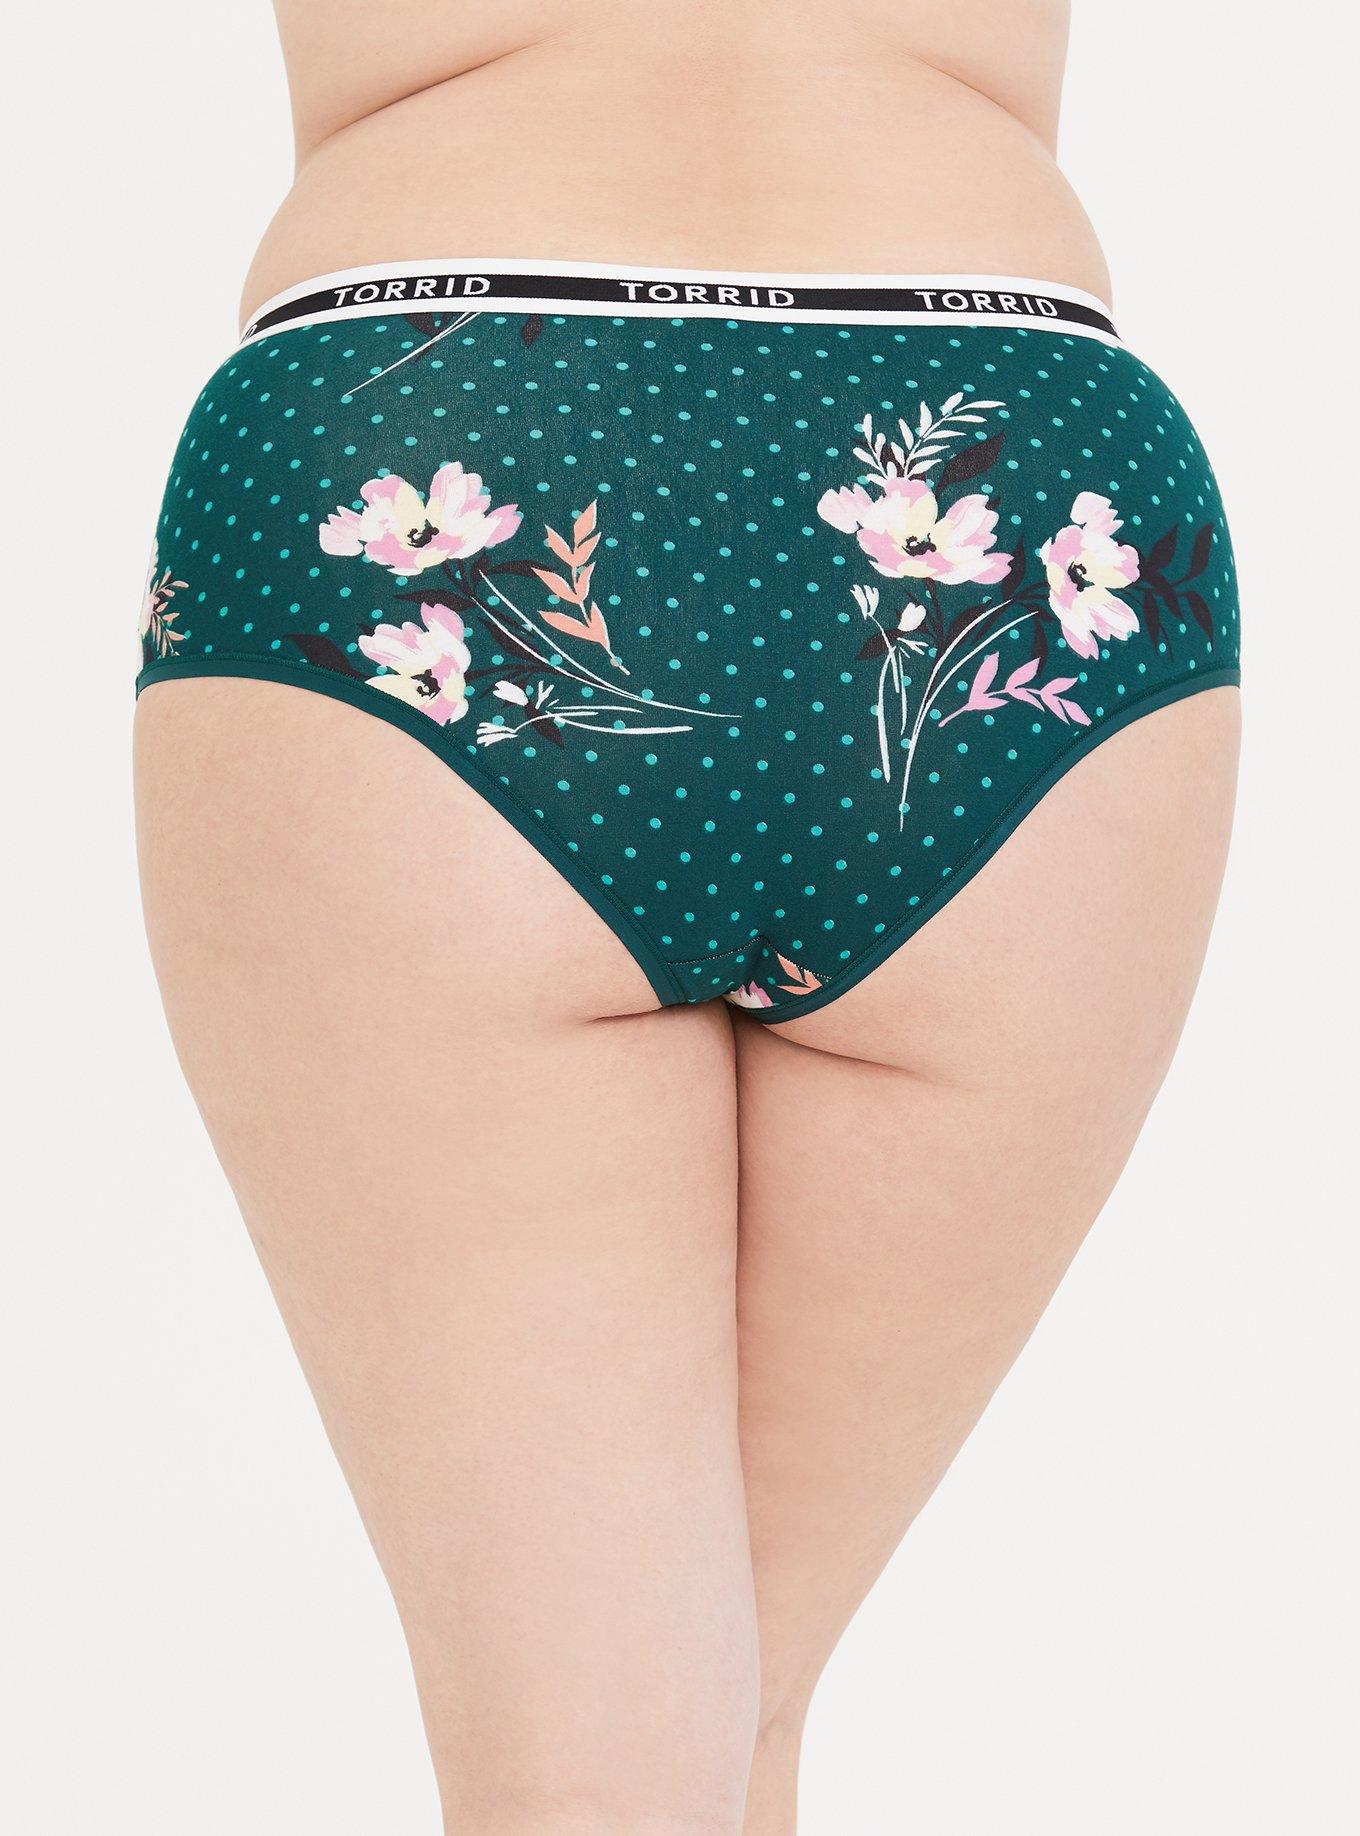 Plus Size - Cotton Mid-Rise Cheeky Logo Panty - Torrid